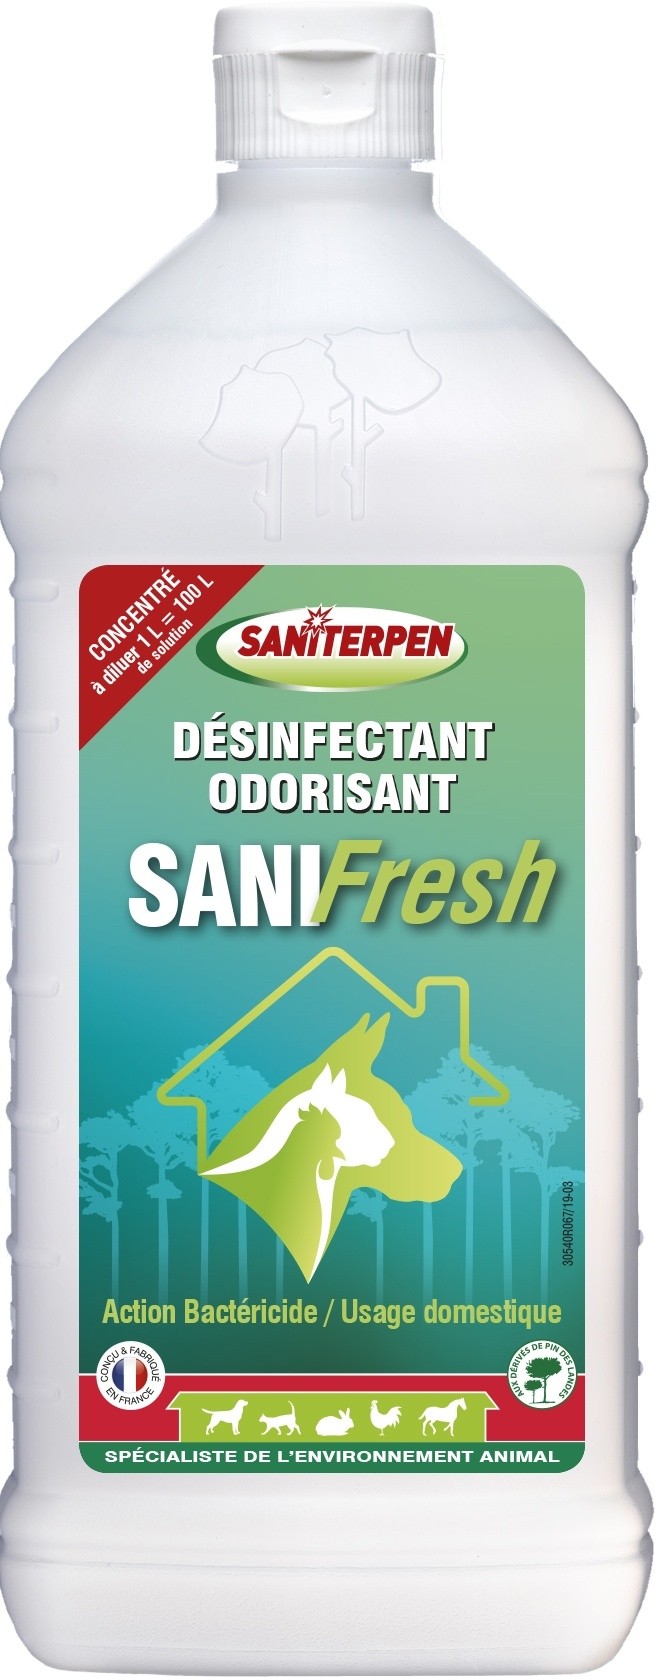 SANITERPEN SANIFRESH Désinfectant Odorisant